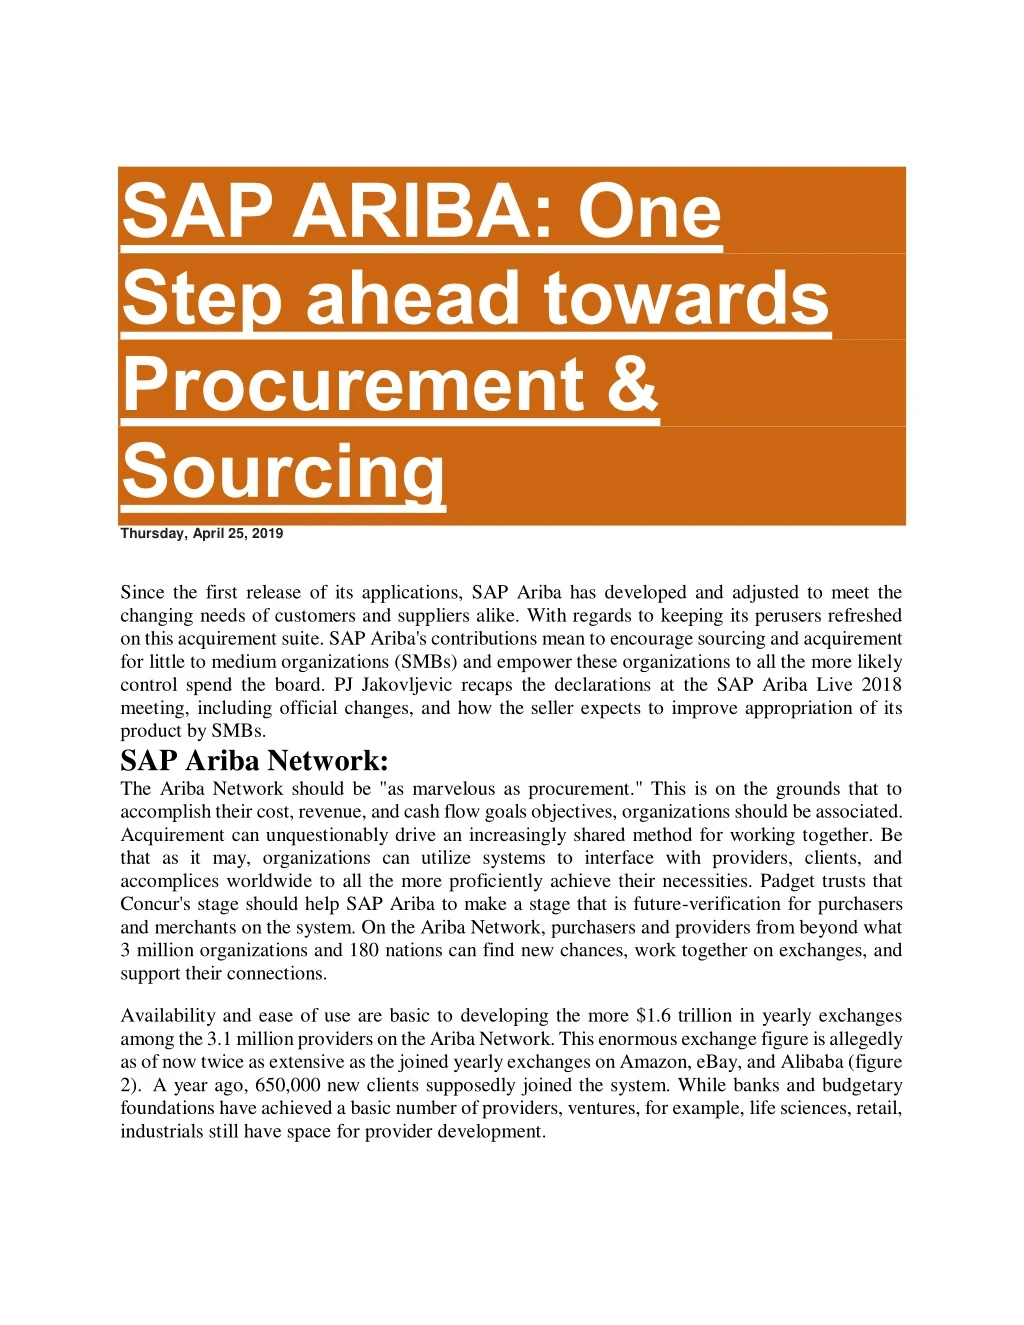 sap ariba one step ahead towards procurement